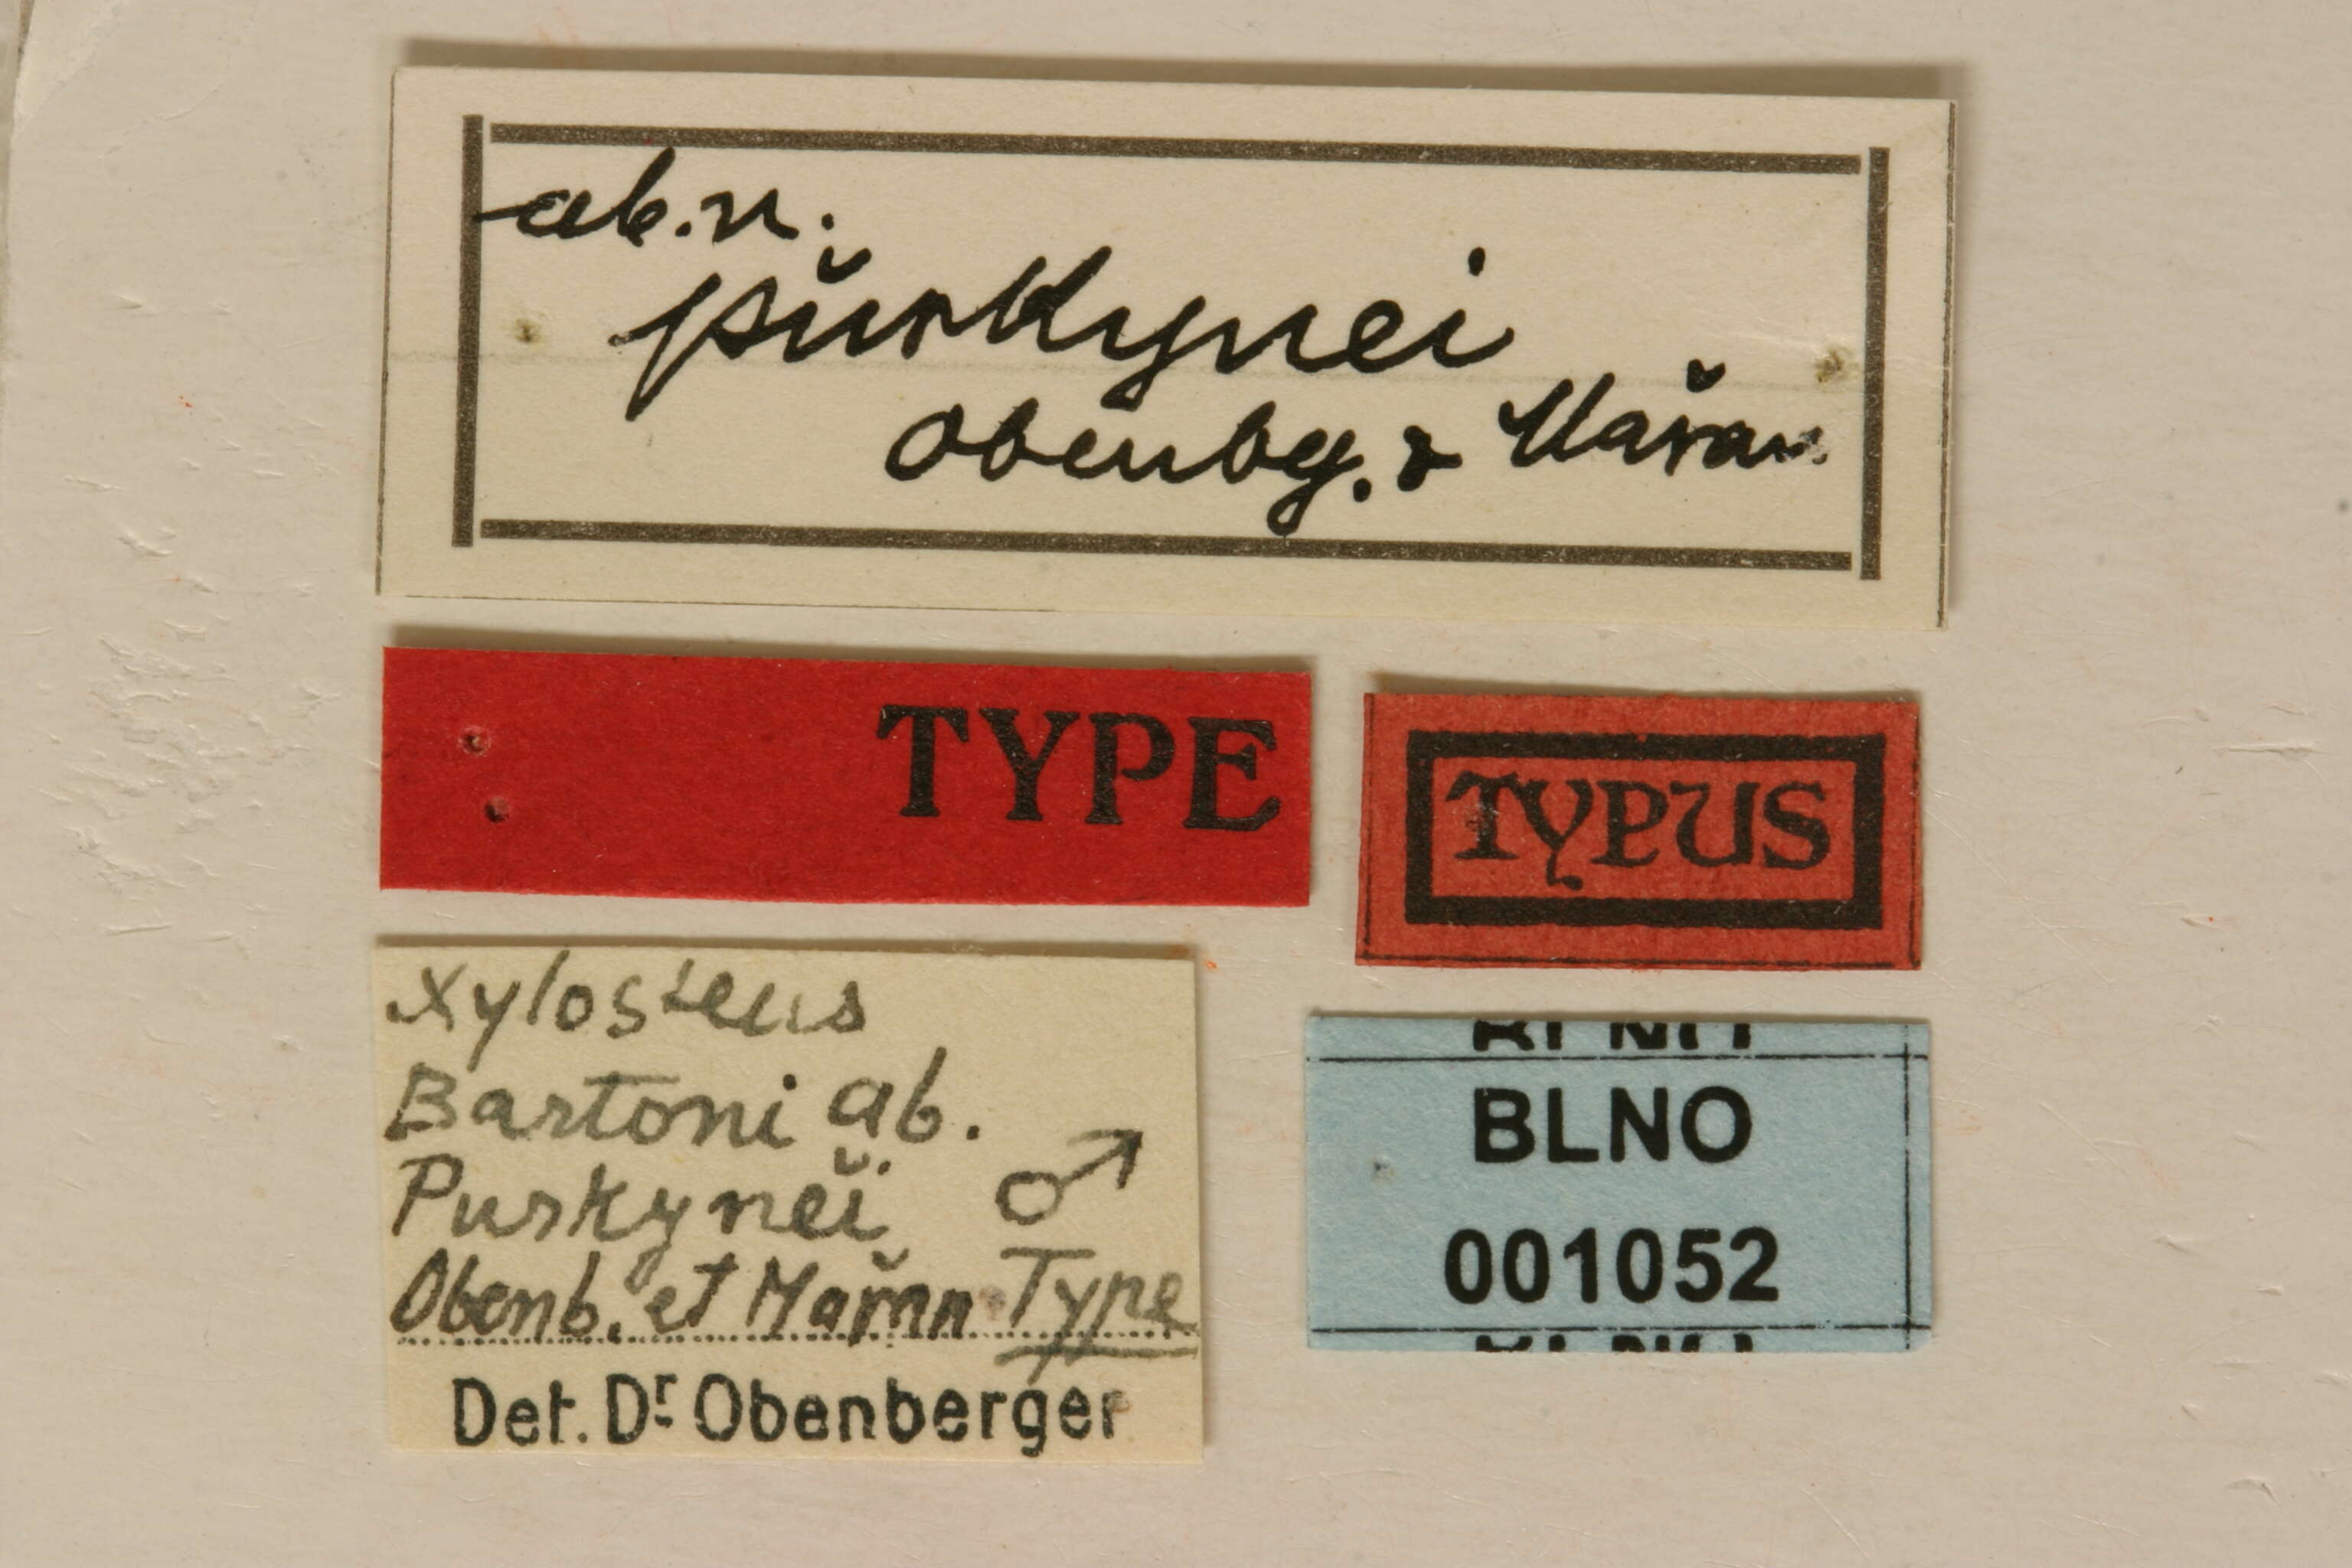 Xylosteus bartoni Obenberger & Maran 1933 resmi